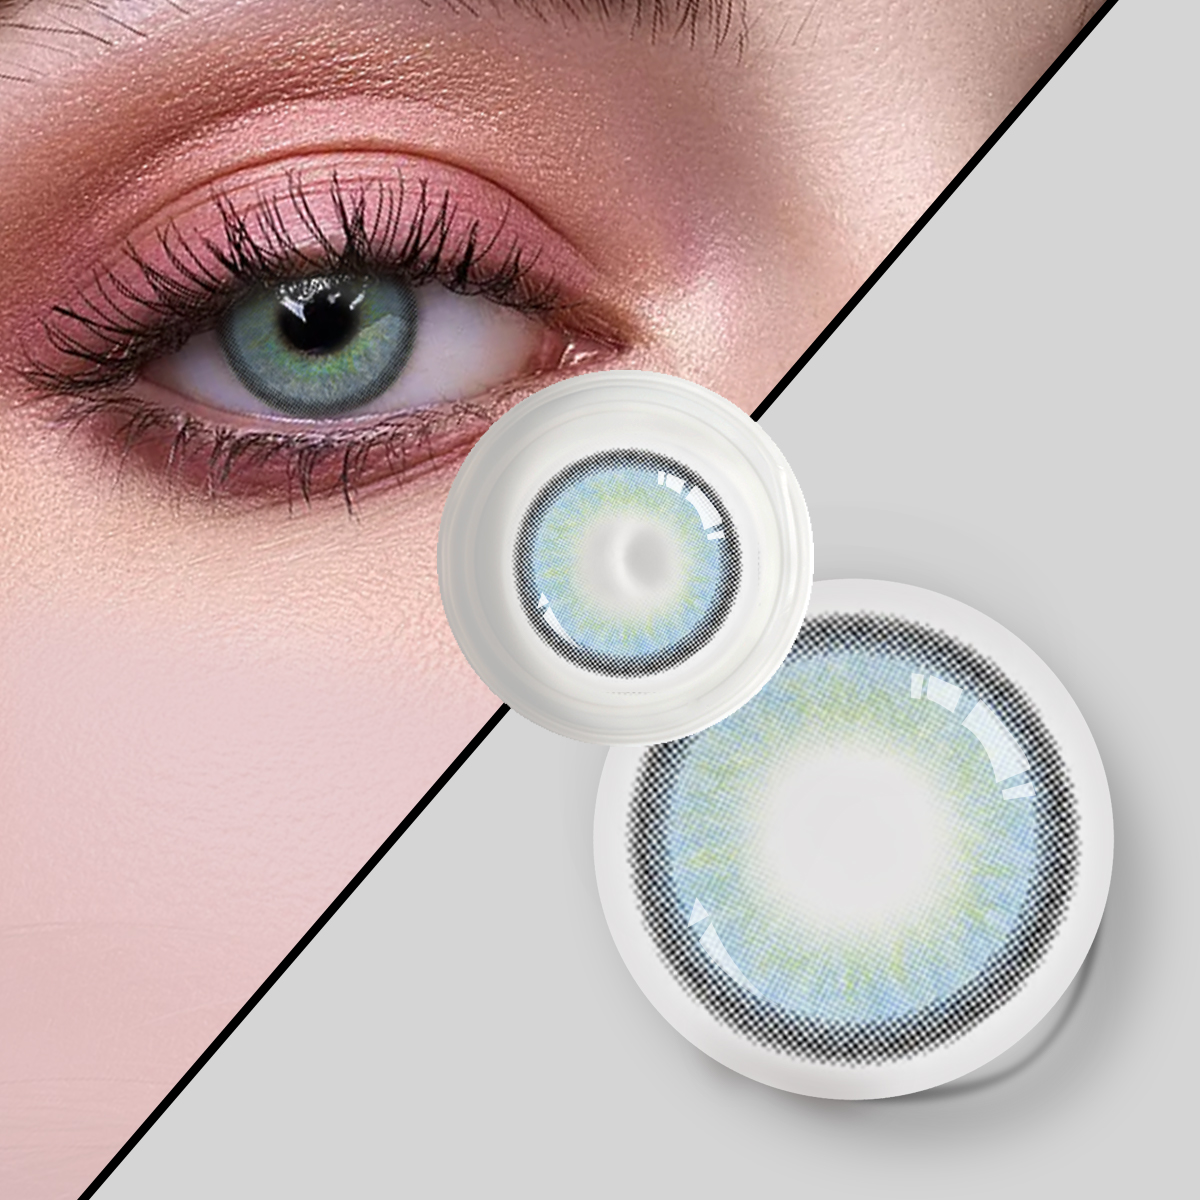 Asul nga contact lenses cosmetic color contact lenses dako nga mata pakyawan eye lens oem contact lenses